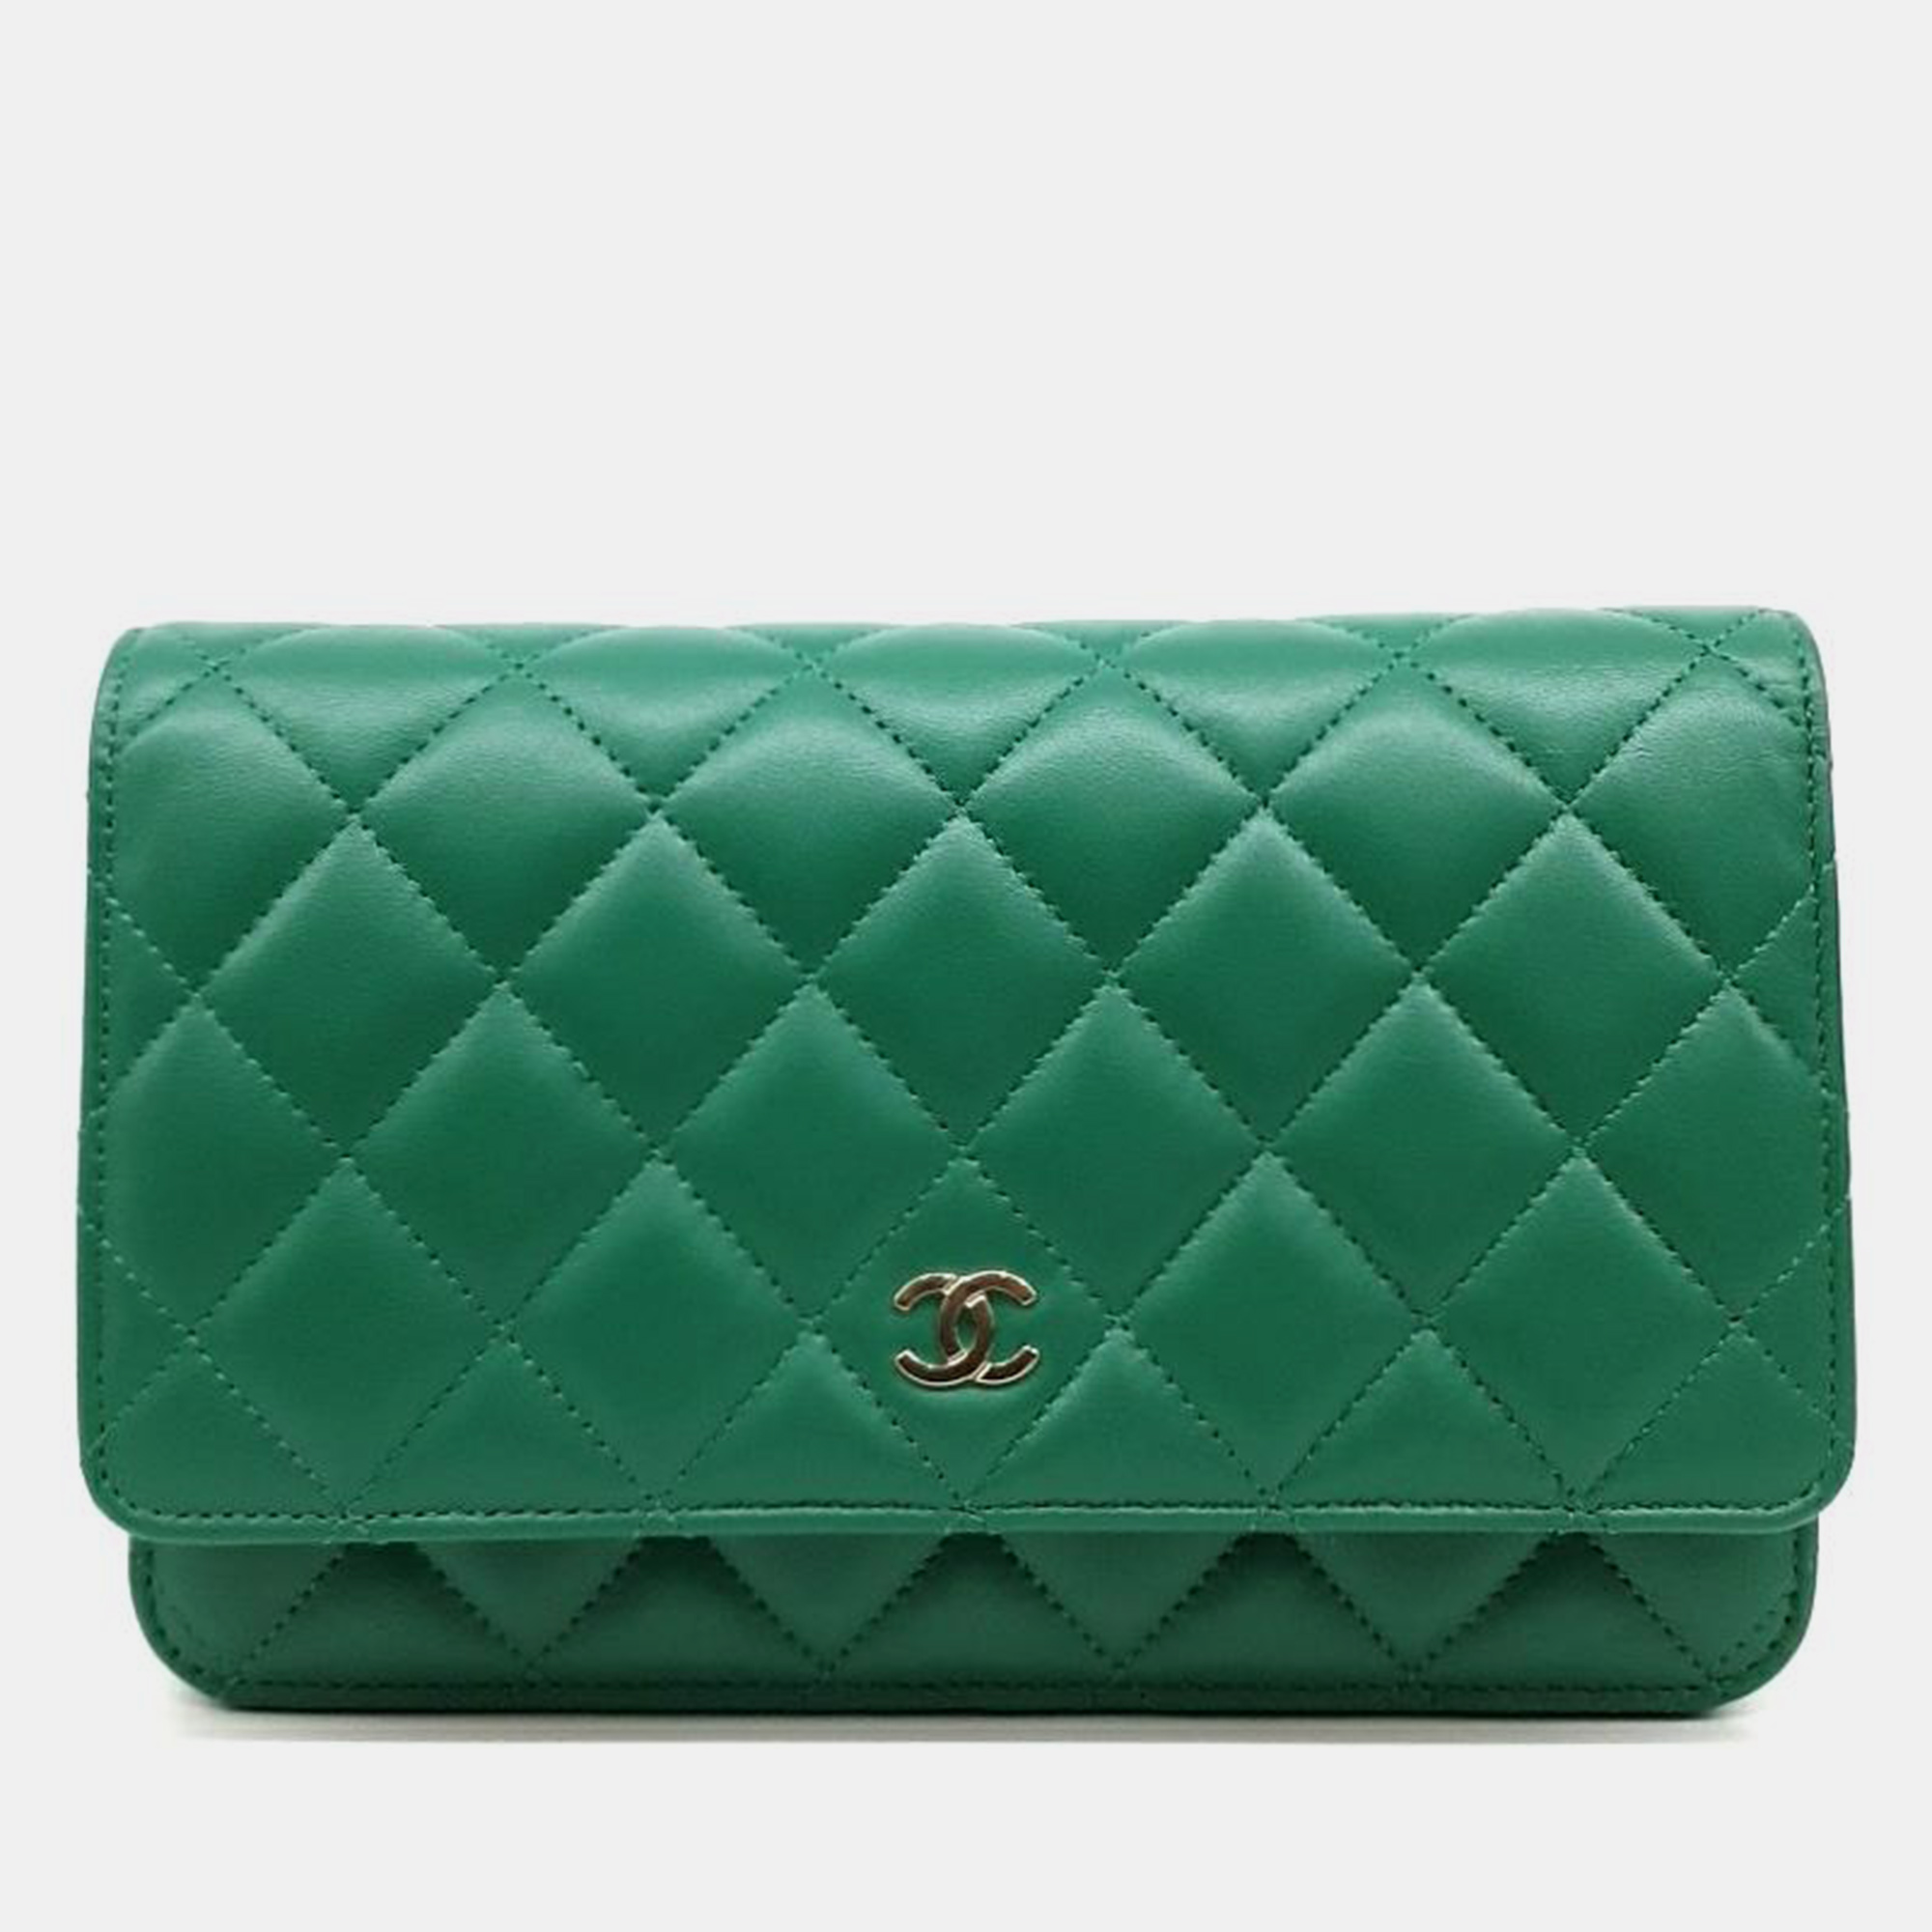 Chanel green lamskin woc mini crossbody bag